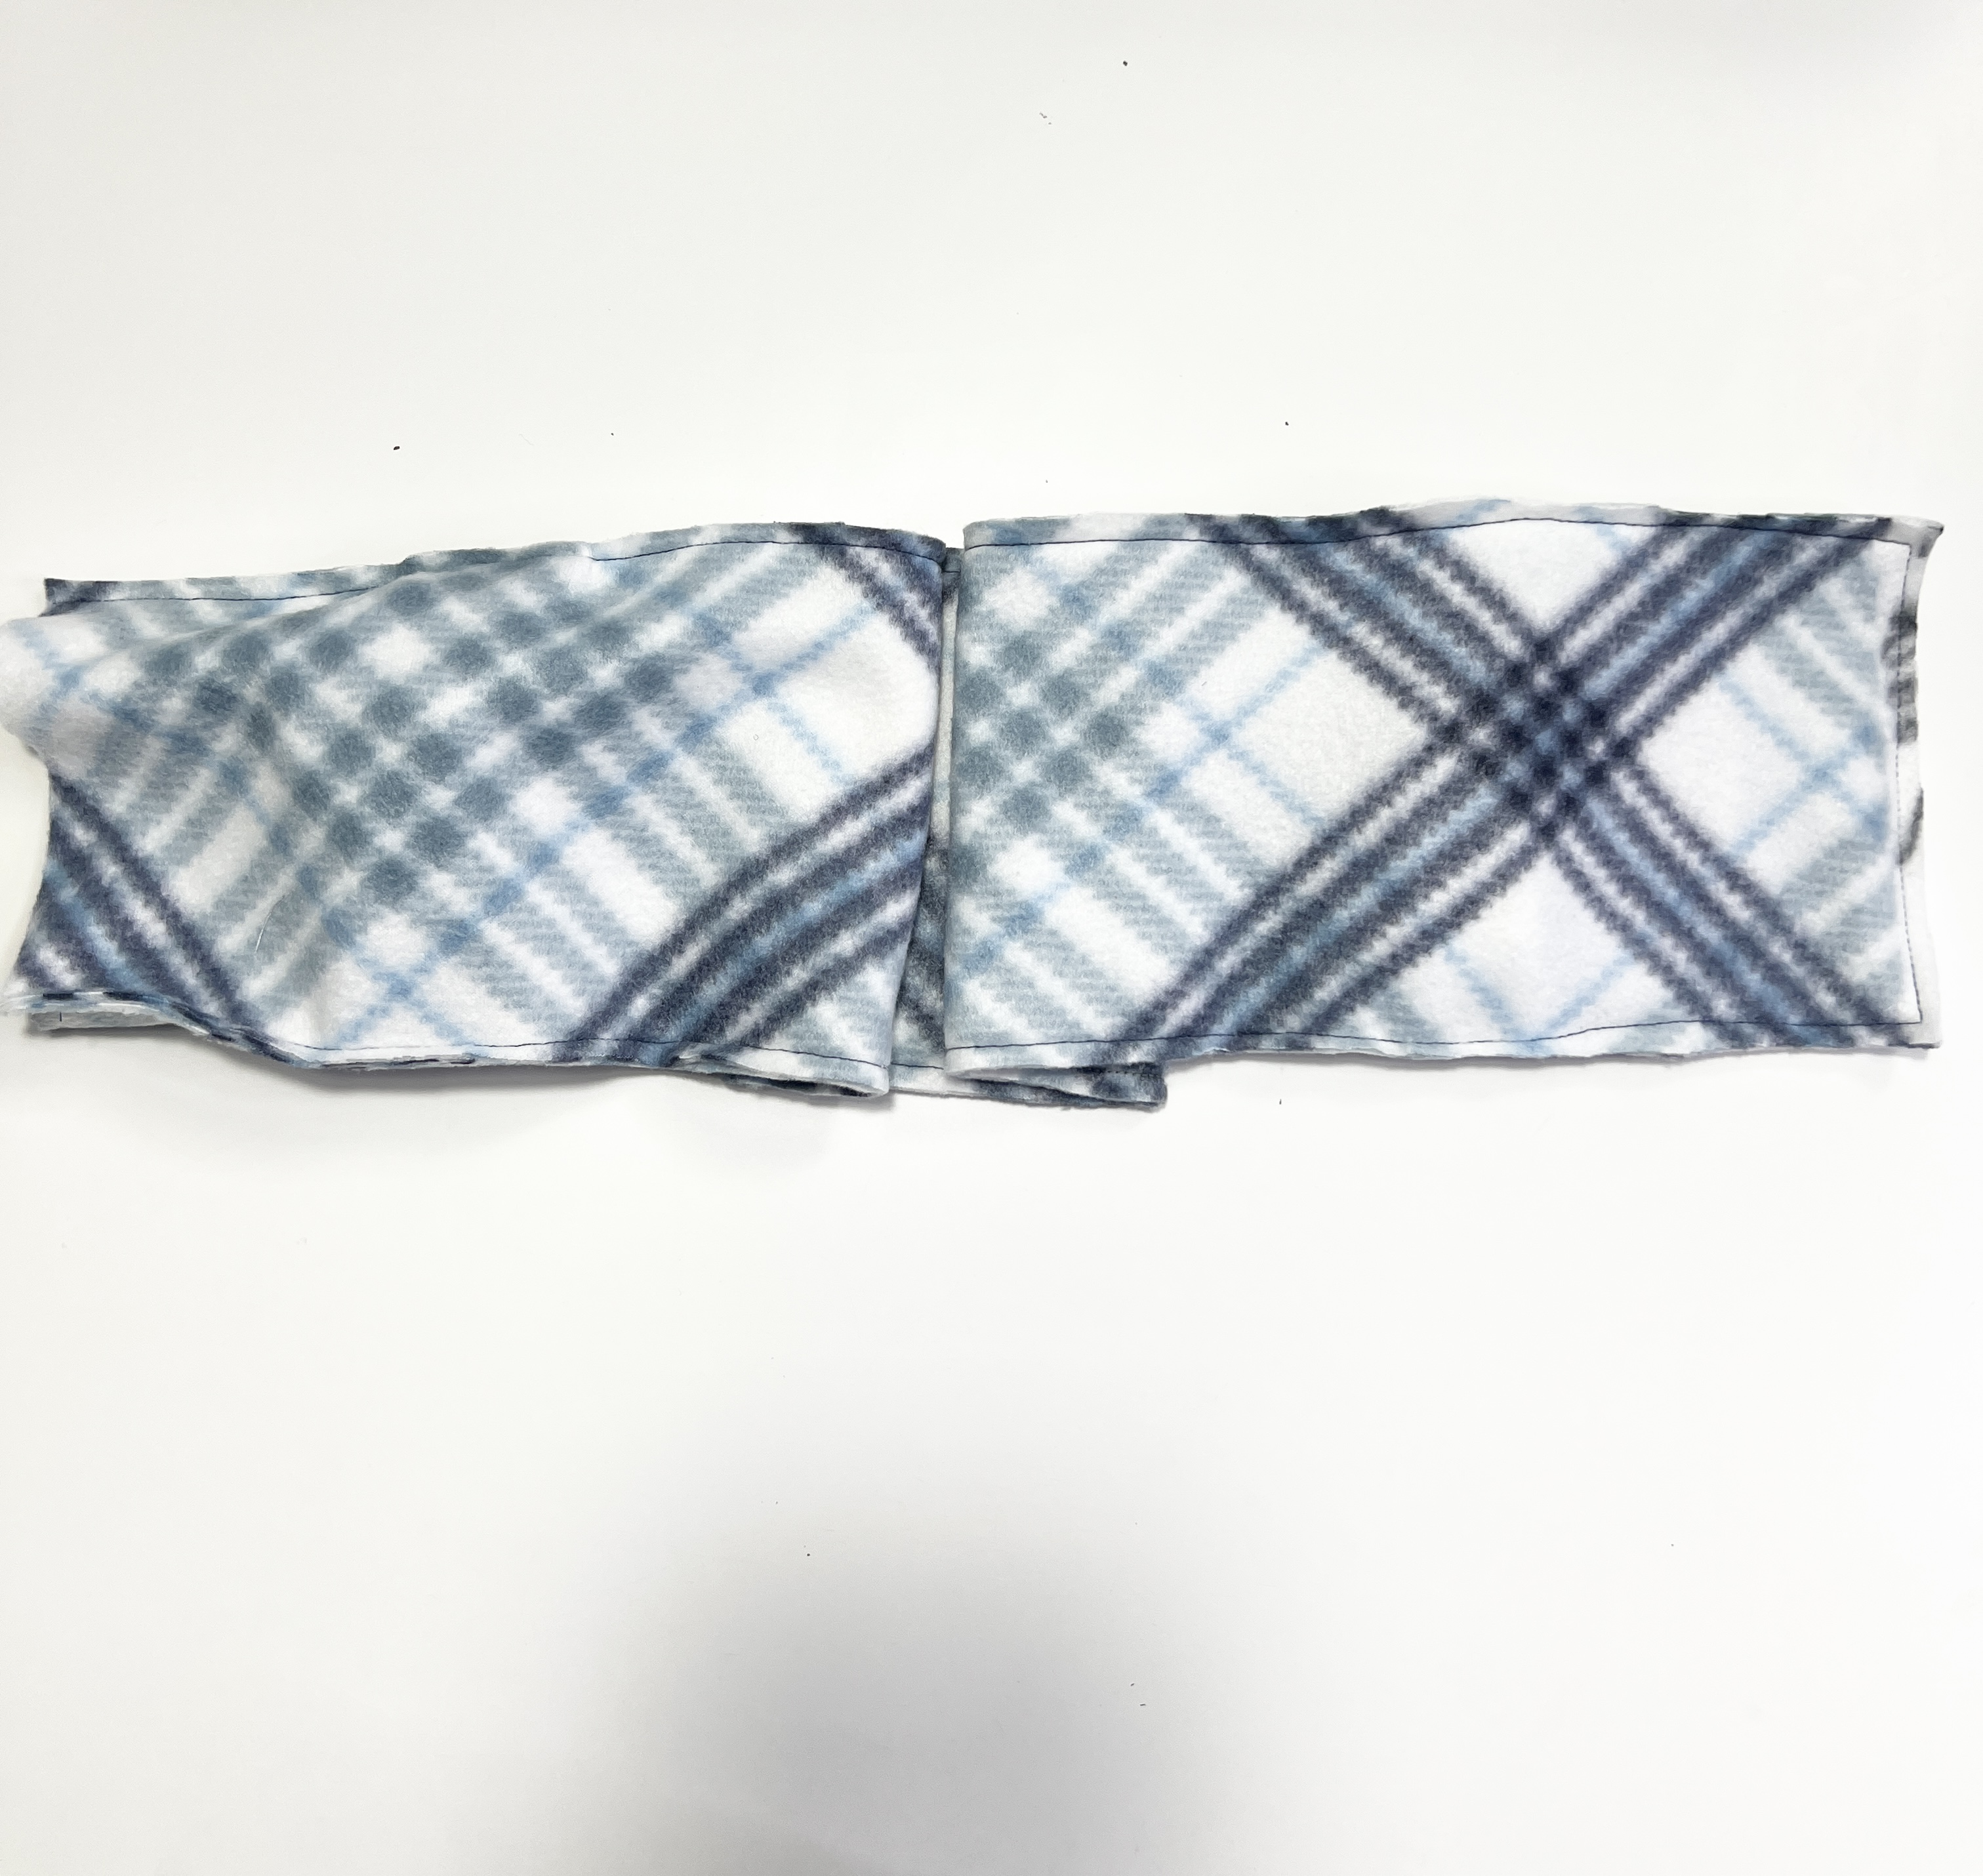 Seat Belt Pillow Tutorial - Sewing The Pillow